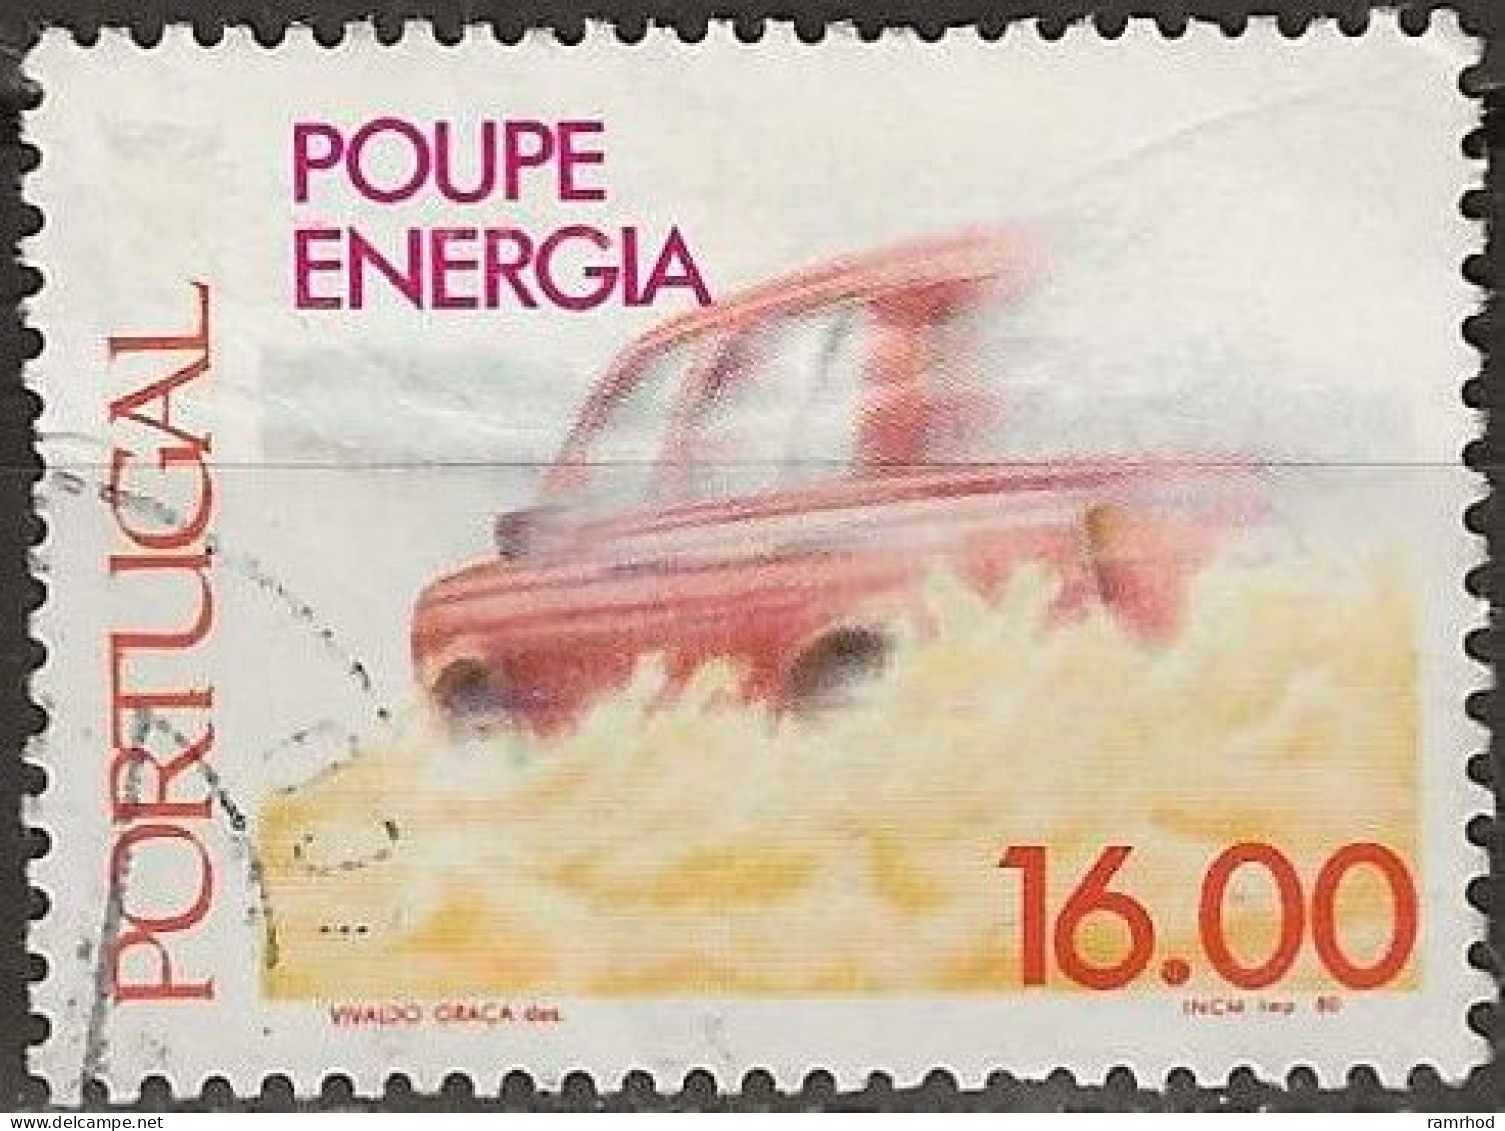 PORTUGAL 1980 Energy Conservation - 6e. - Speeding Car FU - Gebraucht